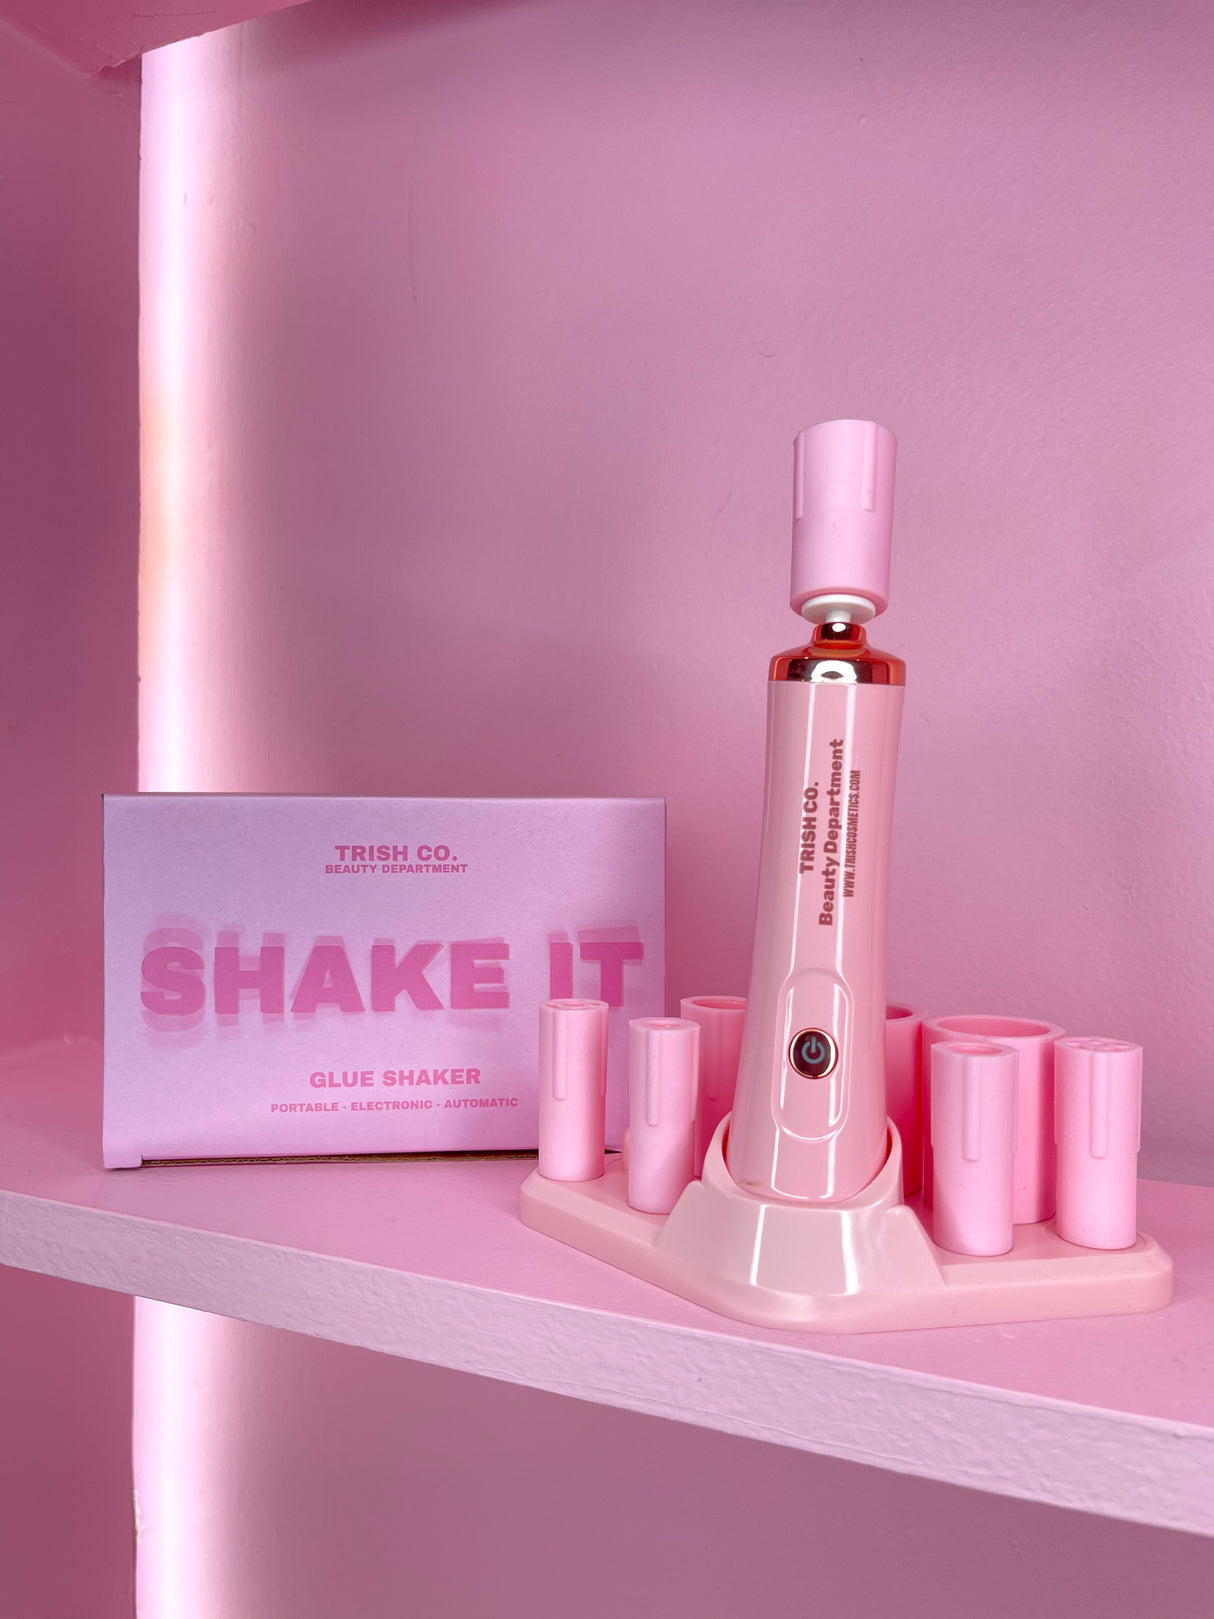 “Shake it” glue shaker